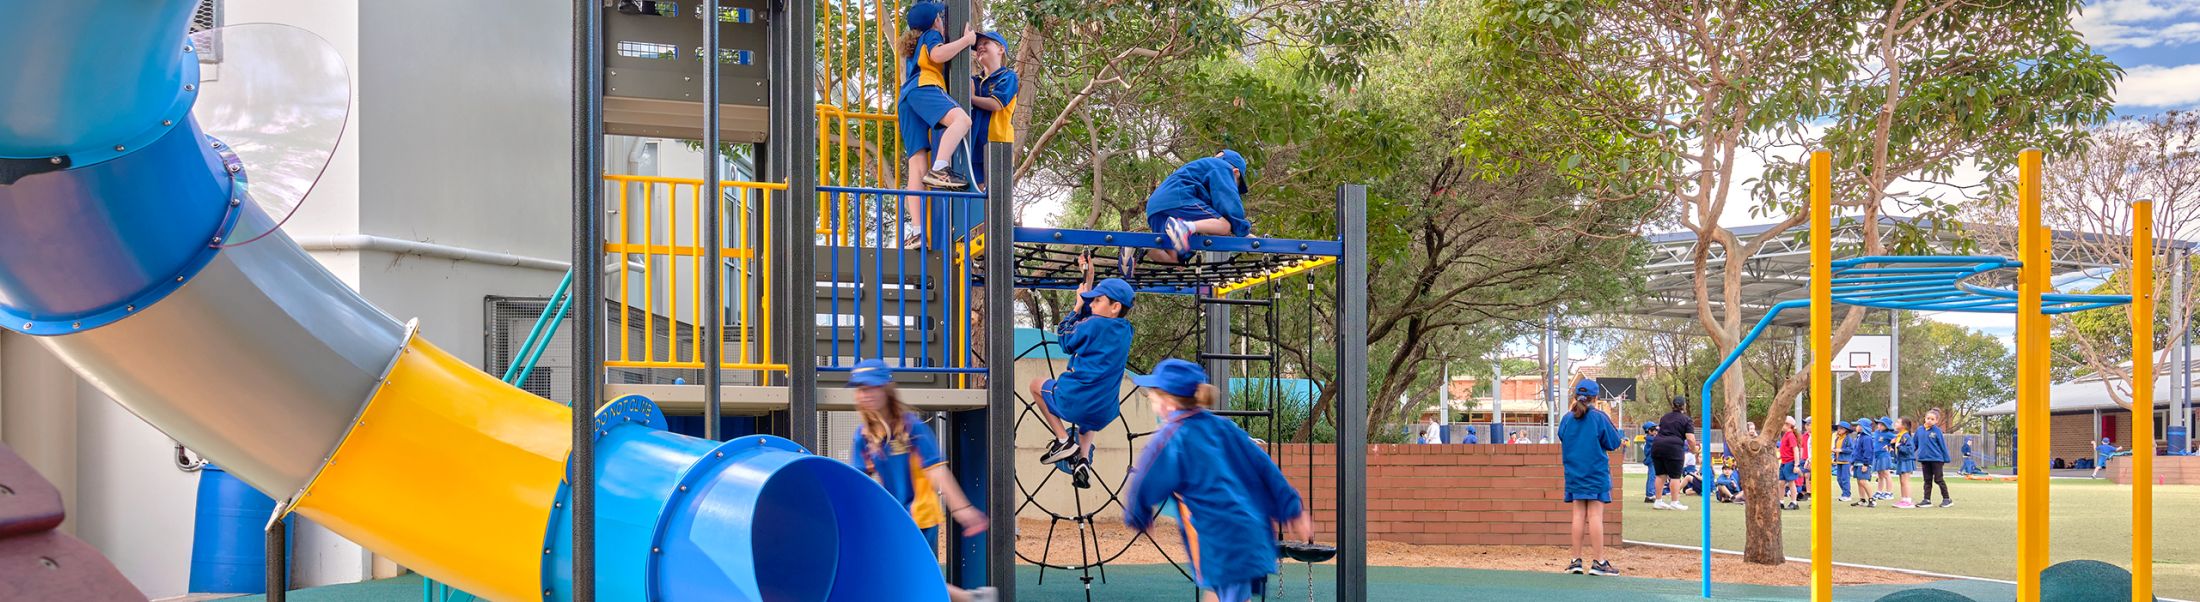 moduplay_ashbury public school playground